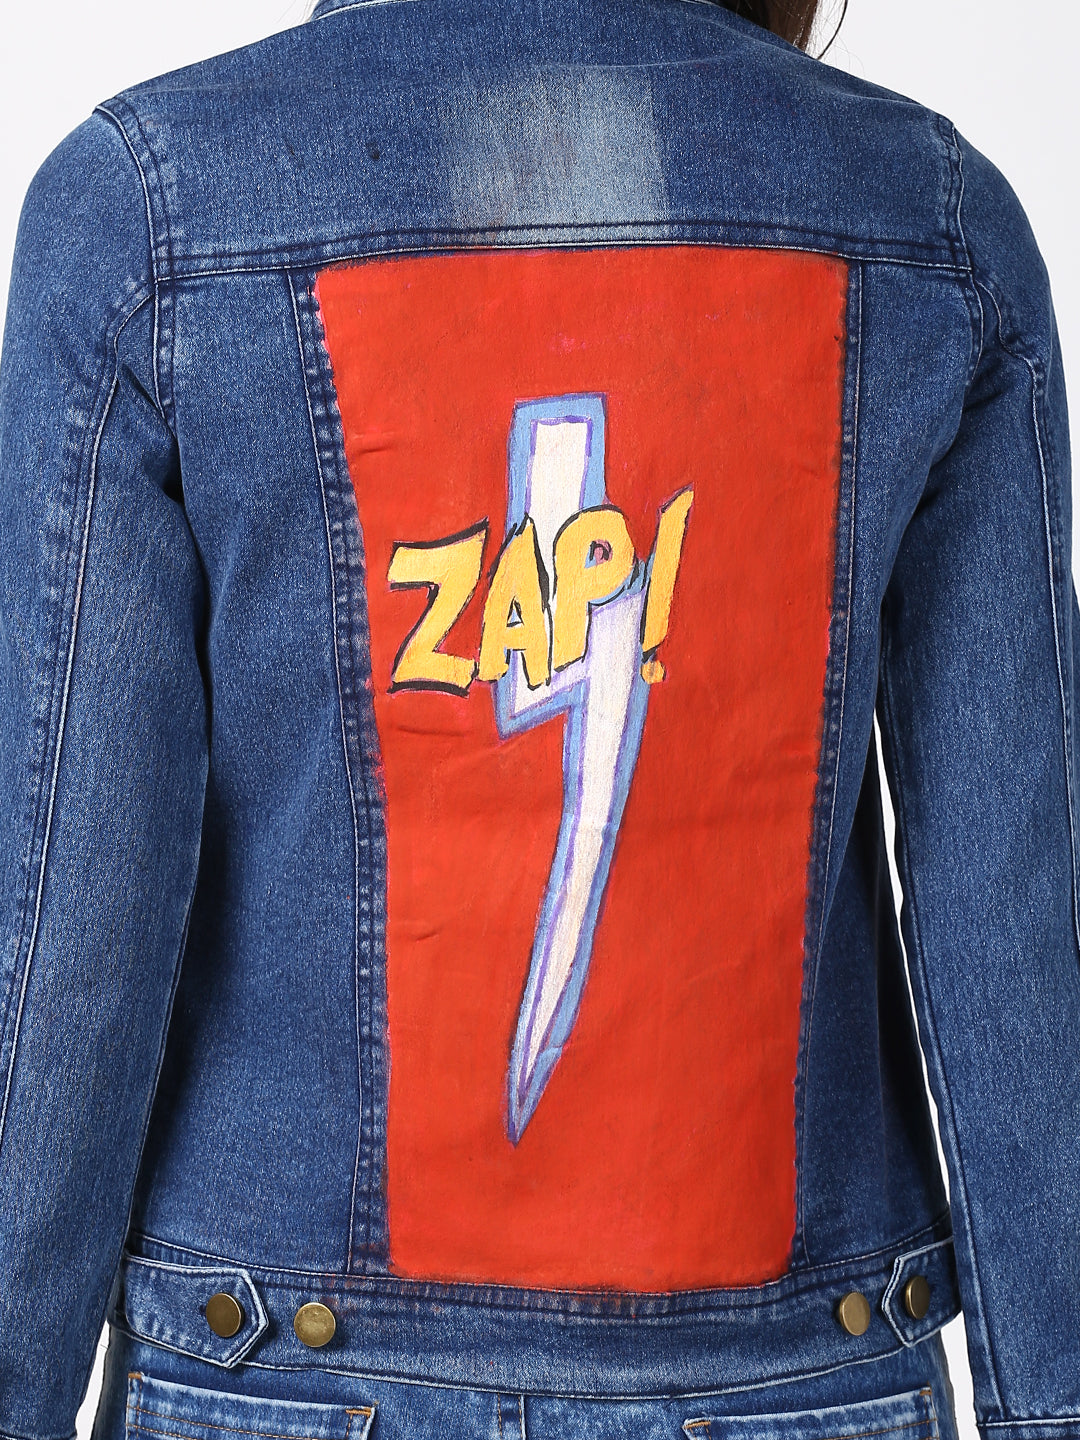 Women's Hand Painted Denim Jacket-Zap